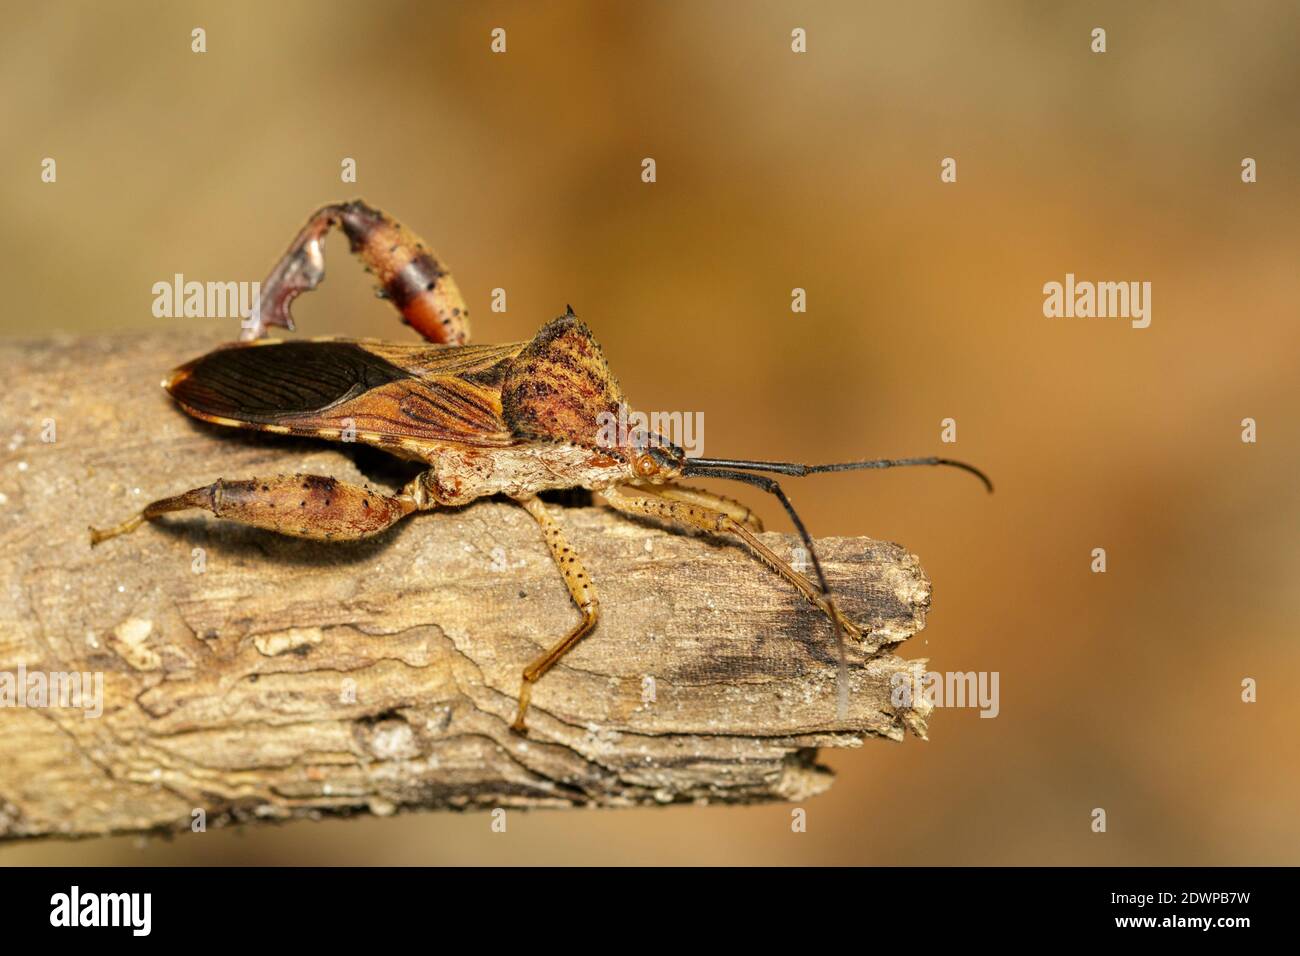 Image of Groundnut Bug, Acanthocoris sordidus (Coreidae) on dry branches. Insect Animal. Stock Photo